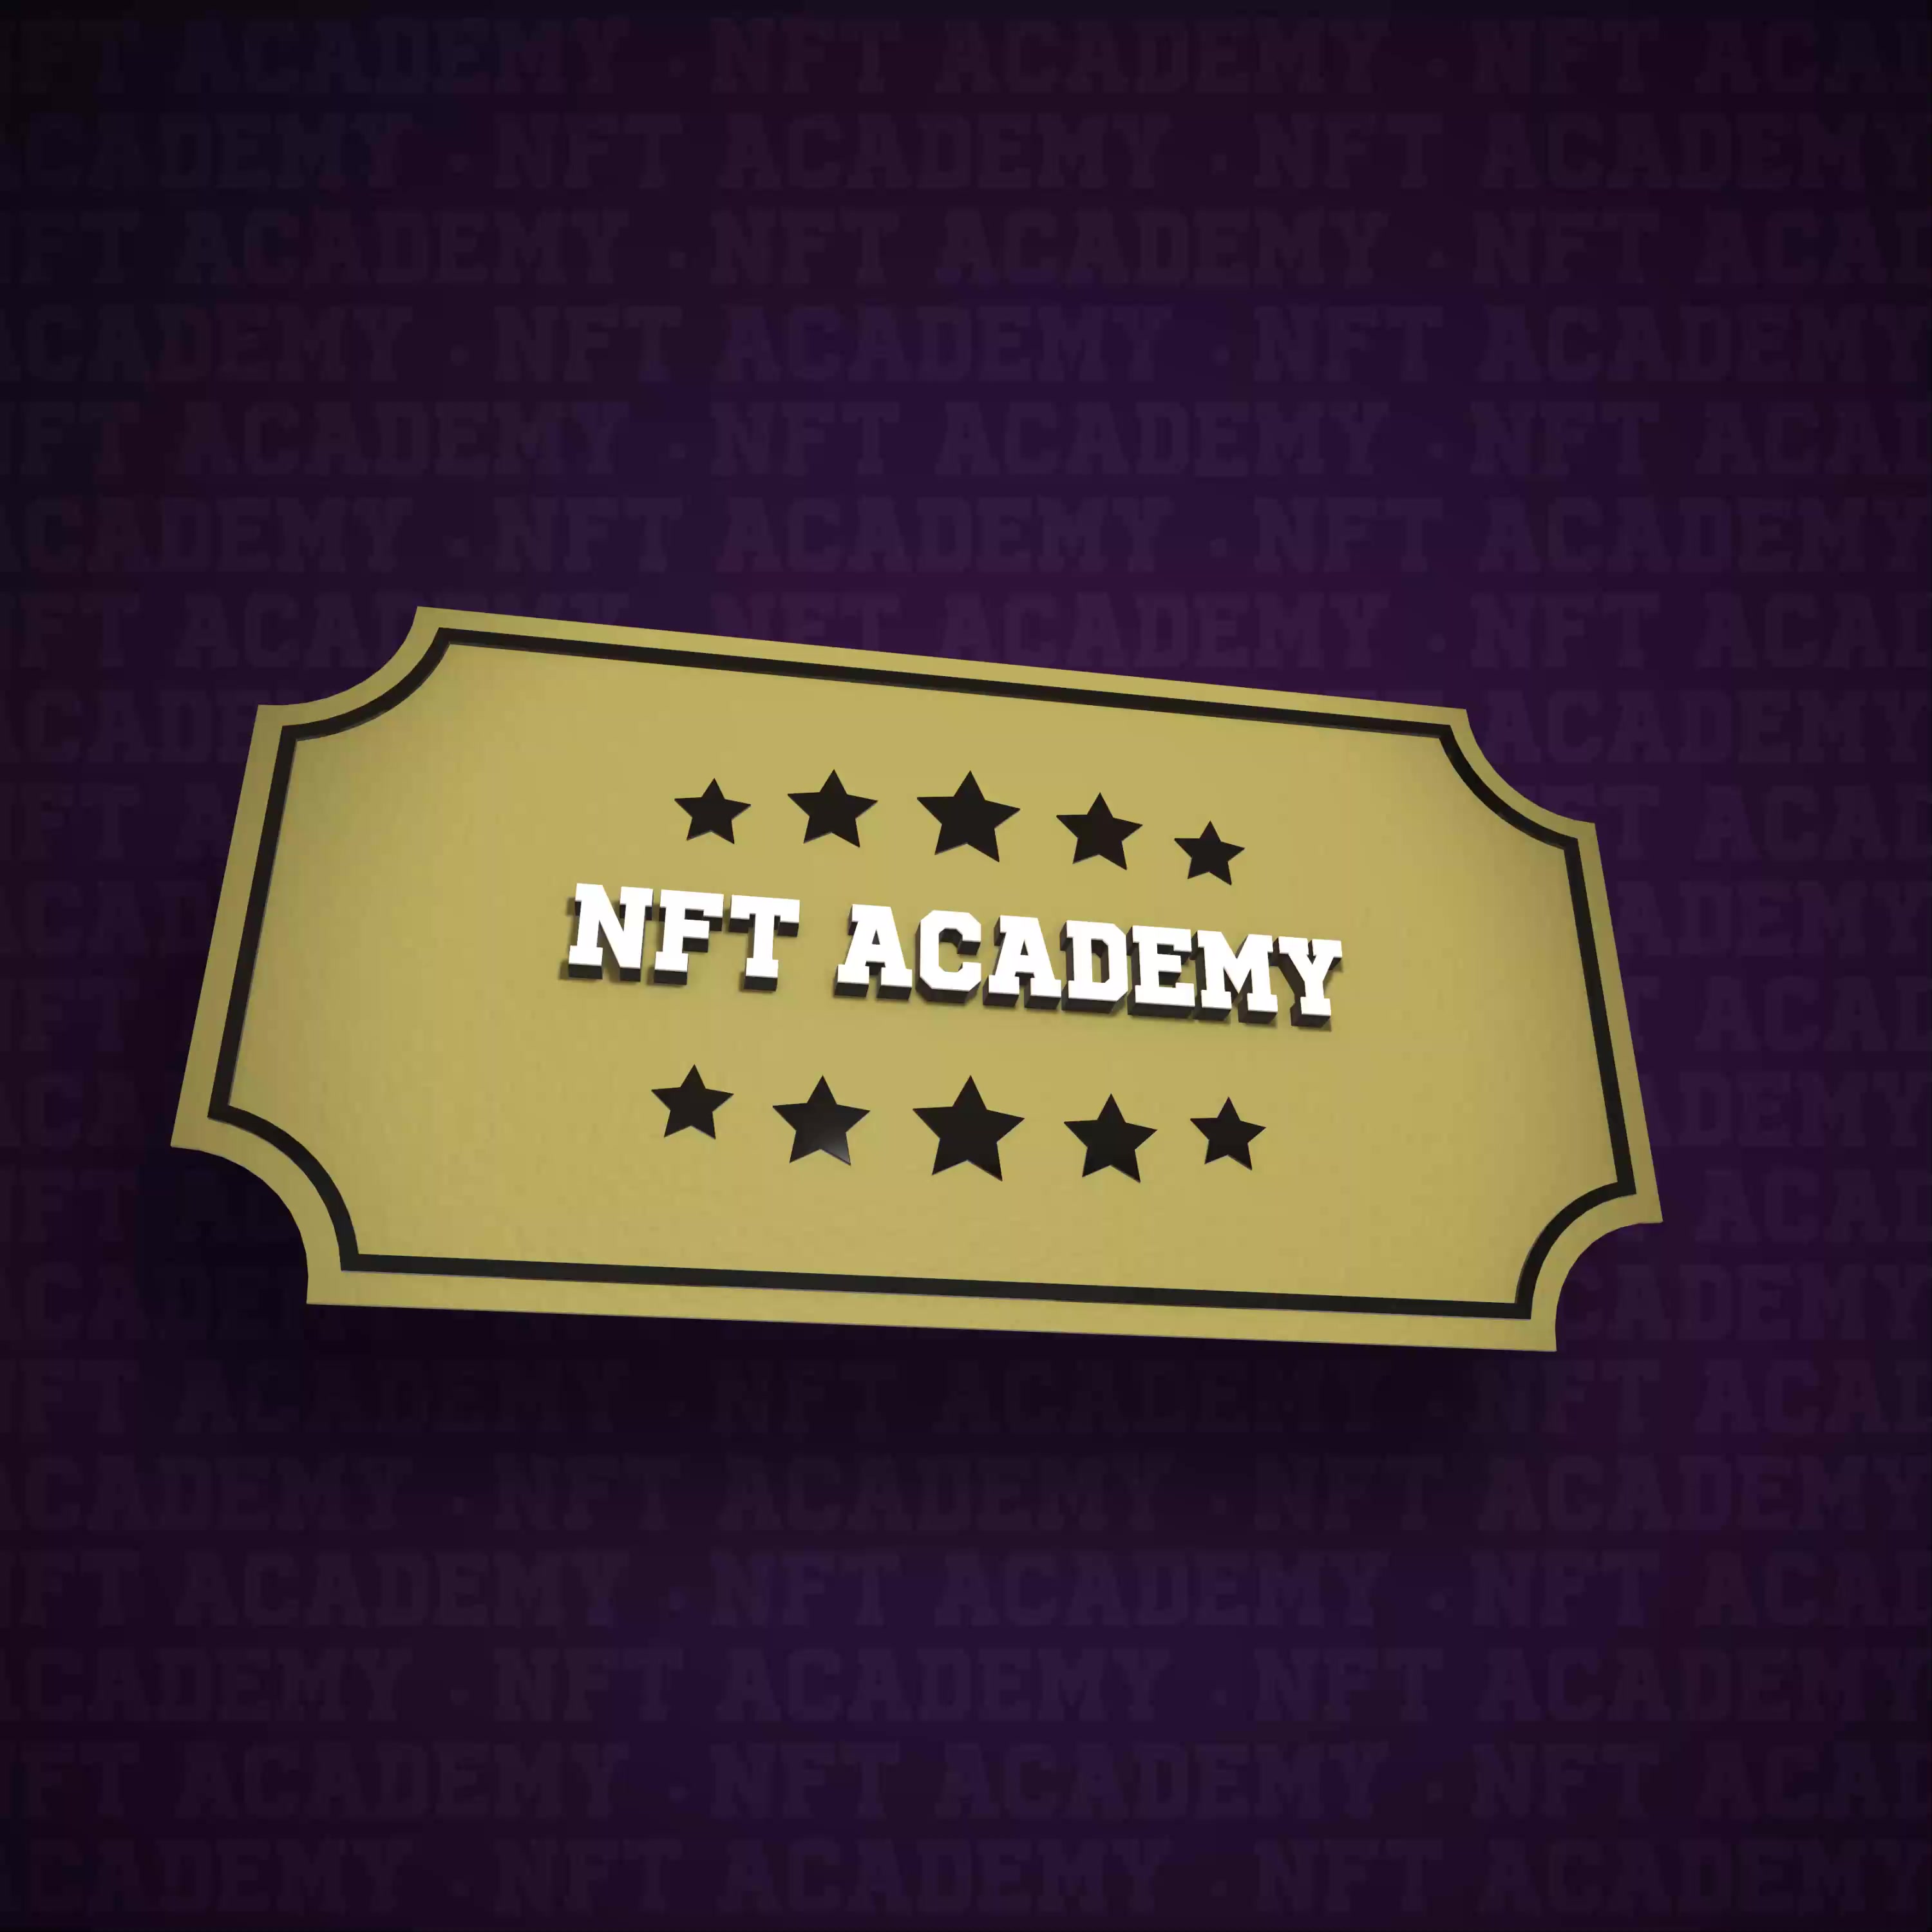 NFT Academy